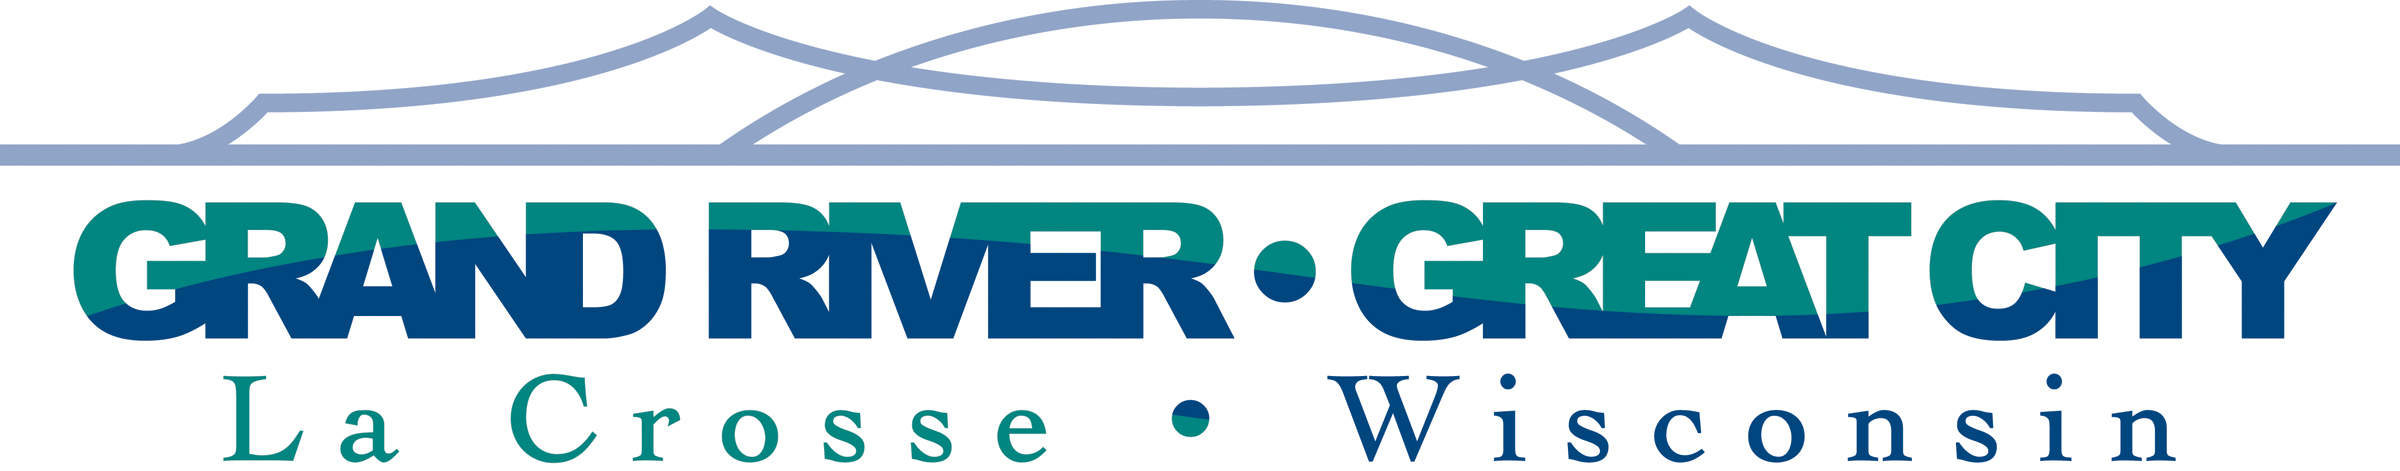 grand river great city logo